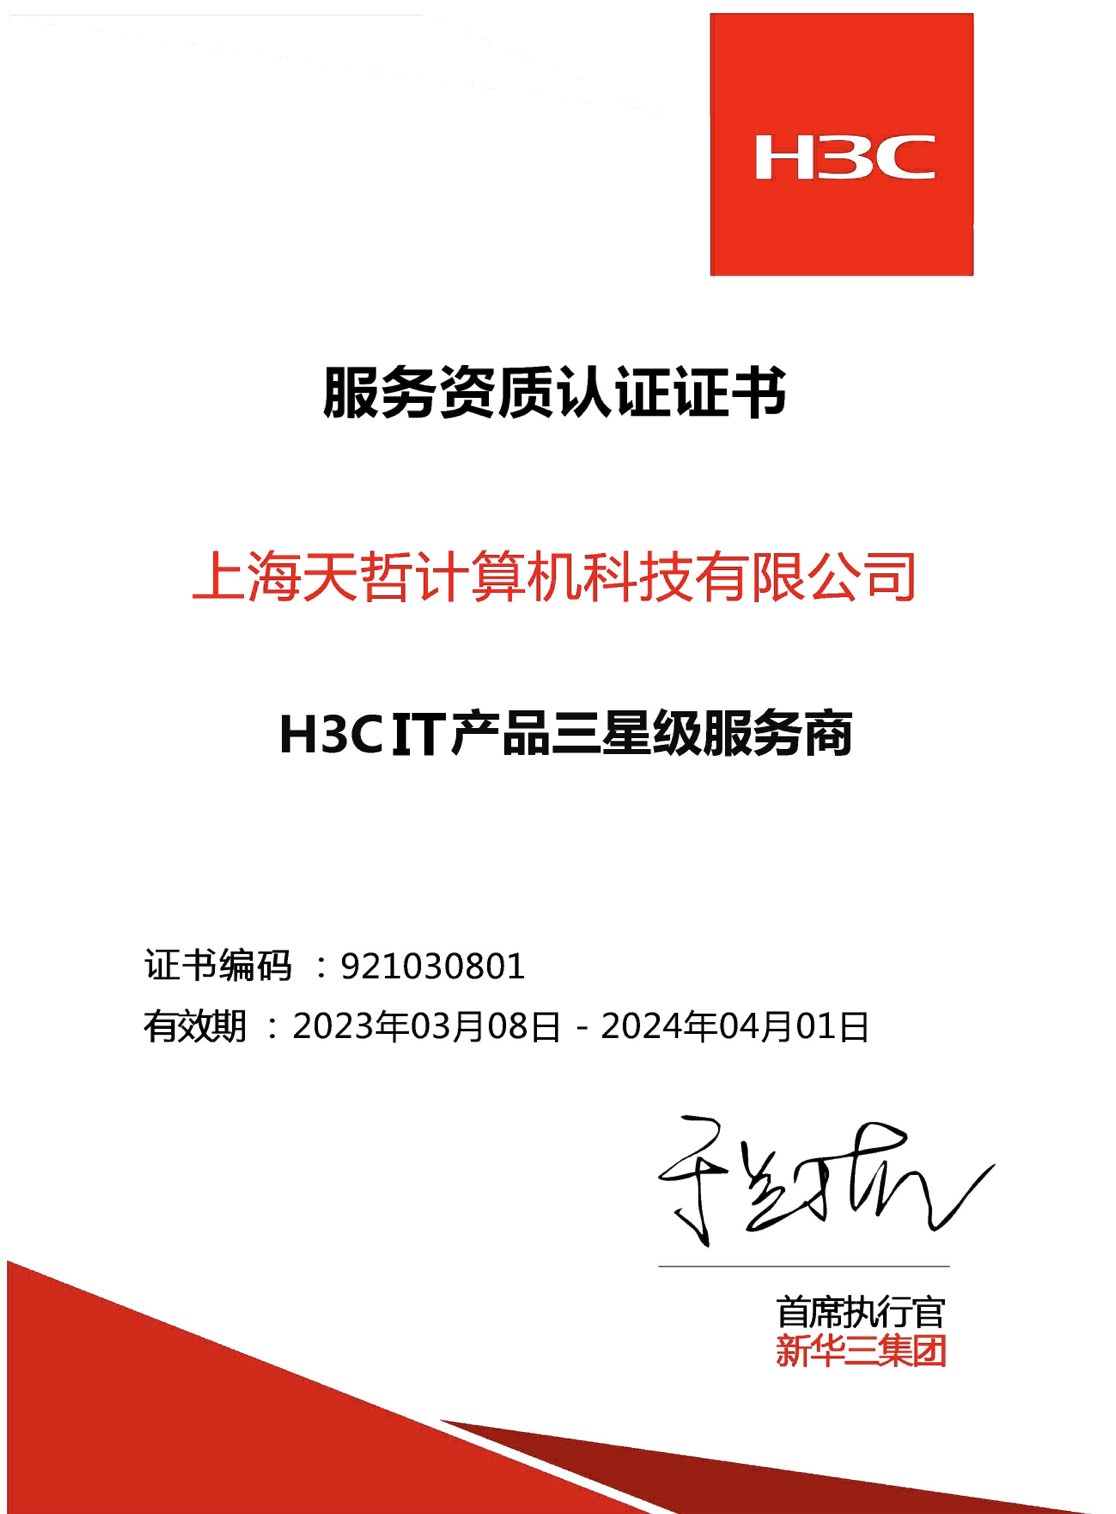 H3CIT产品三星级服务商